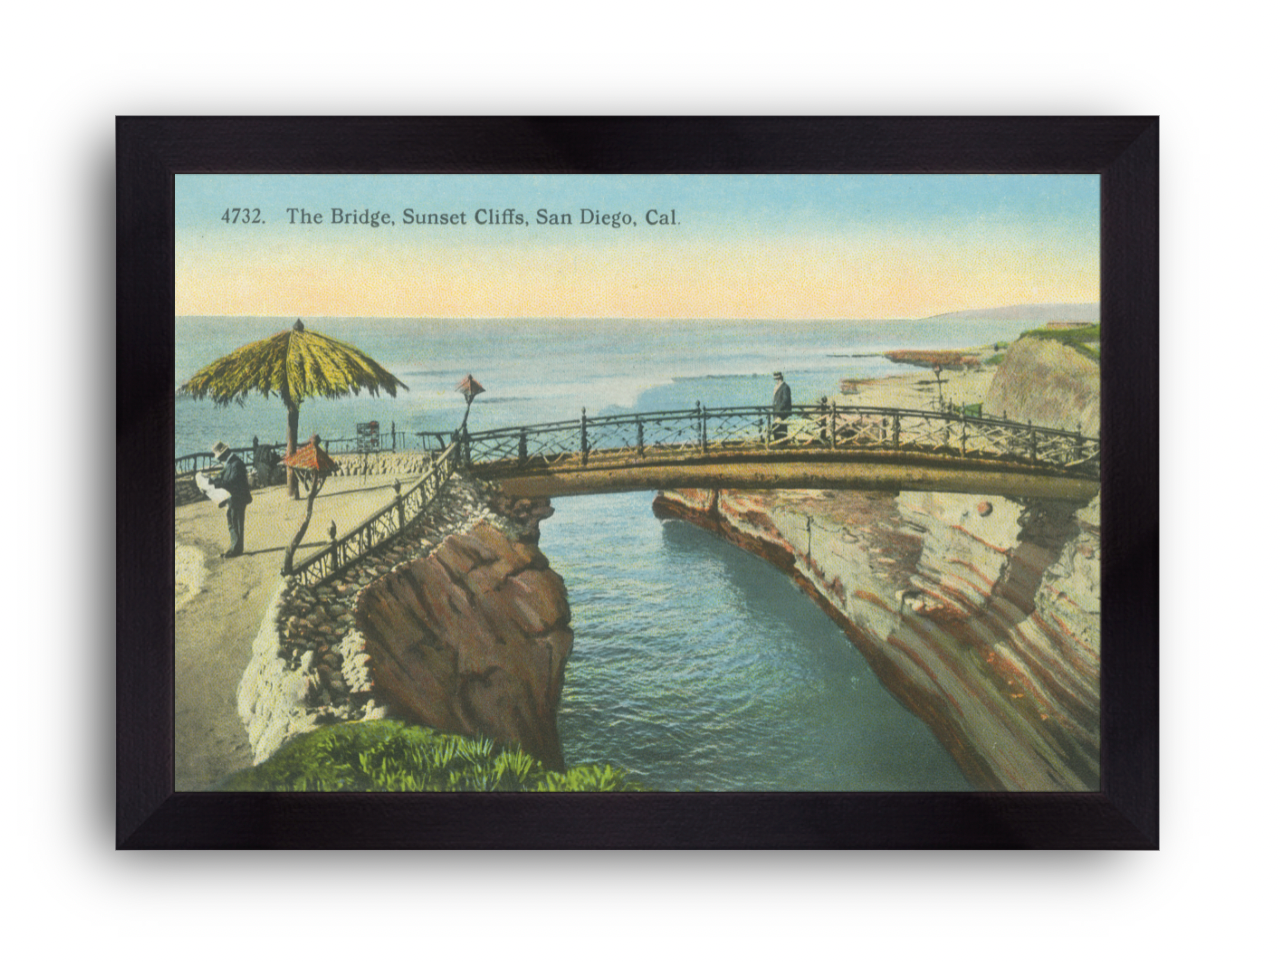 The Bridge, Sunset Cliffs, San Diego circa 1915